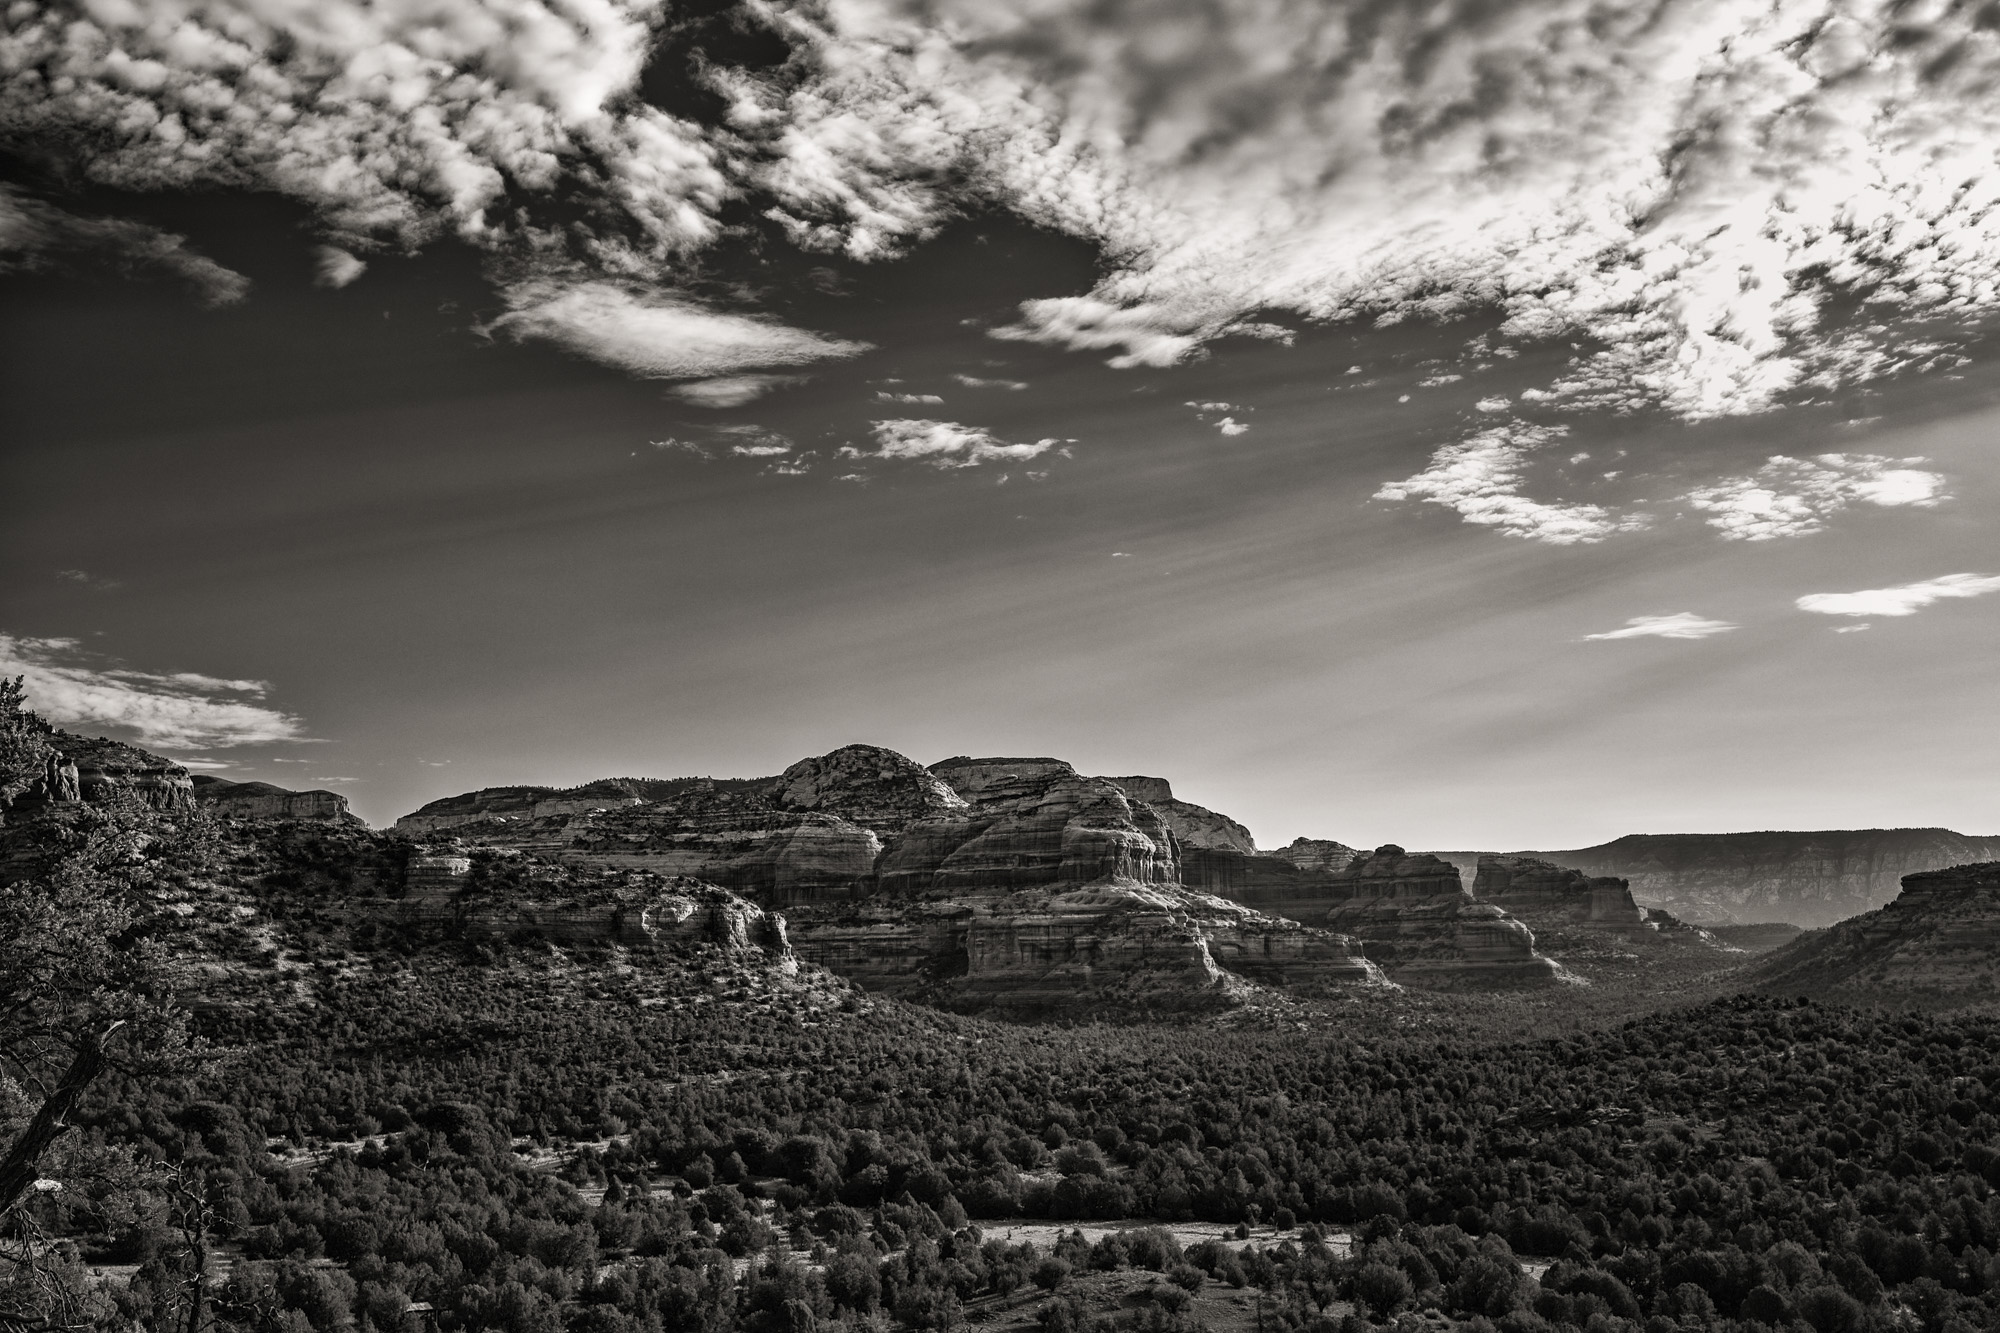 Sedona landscape in black and white